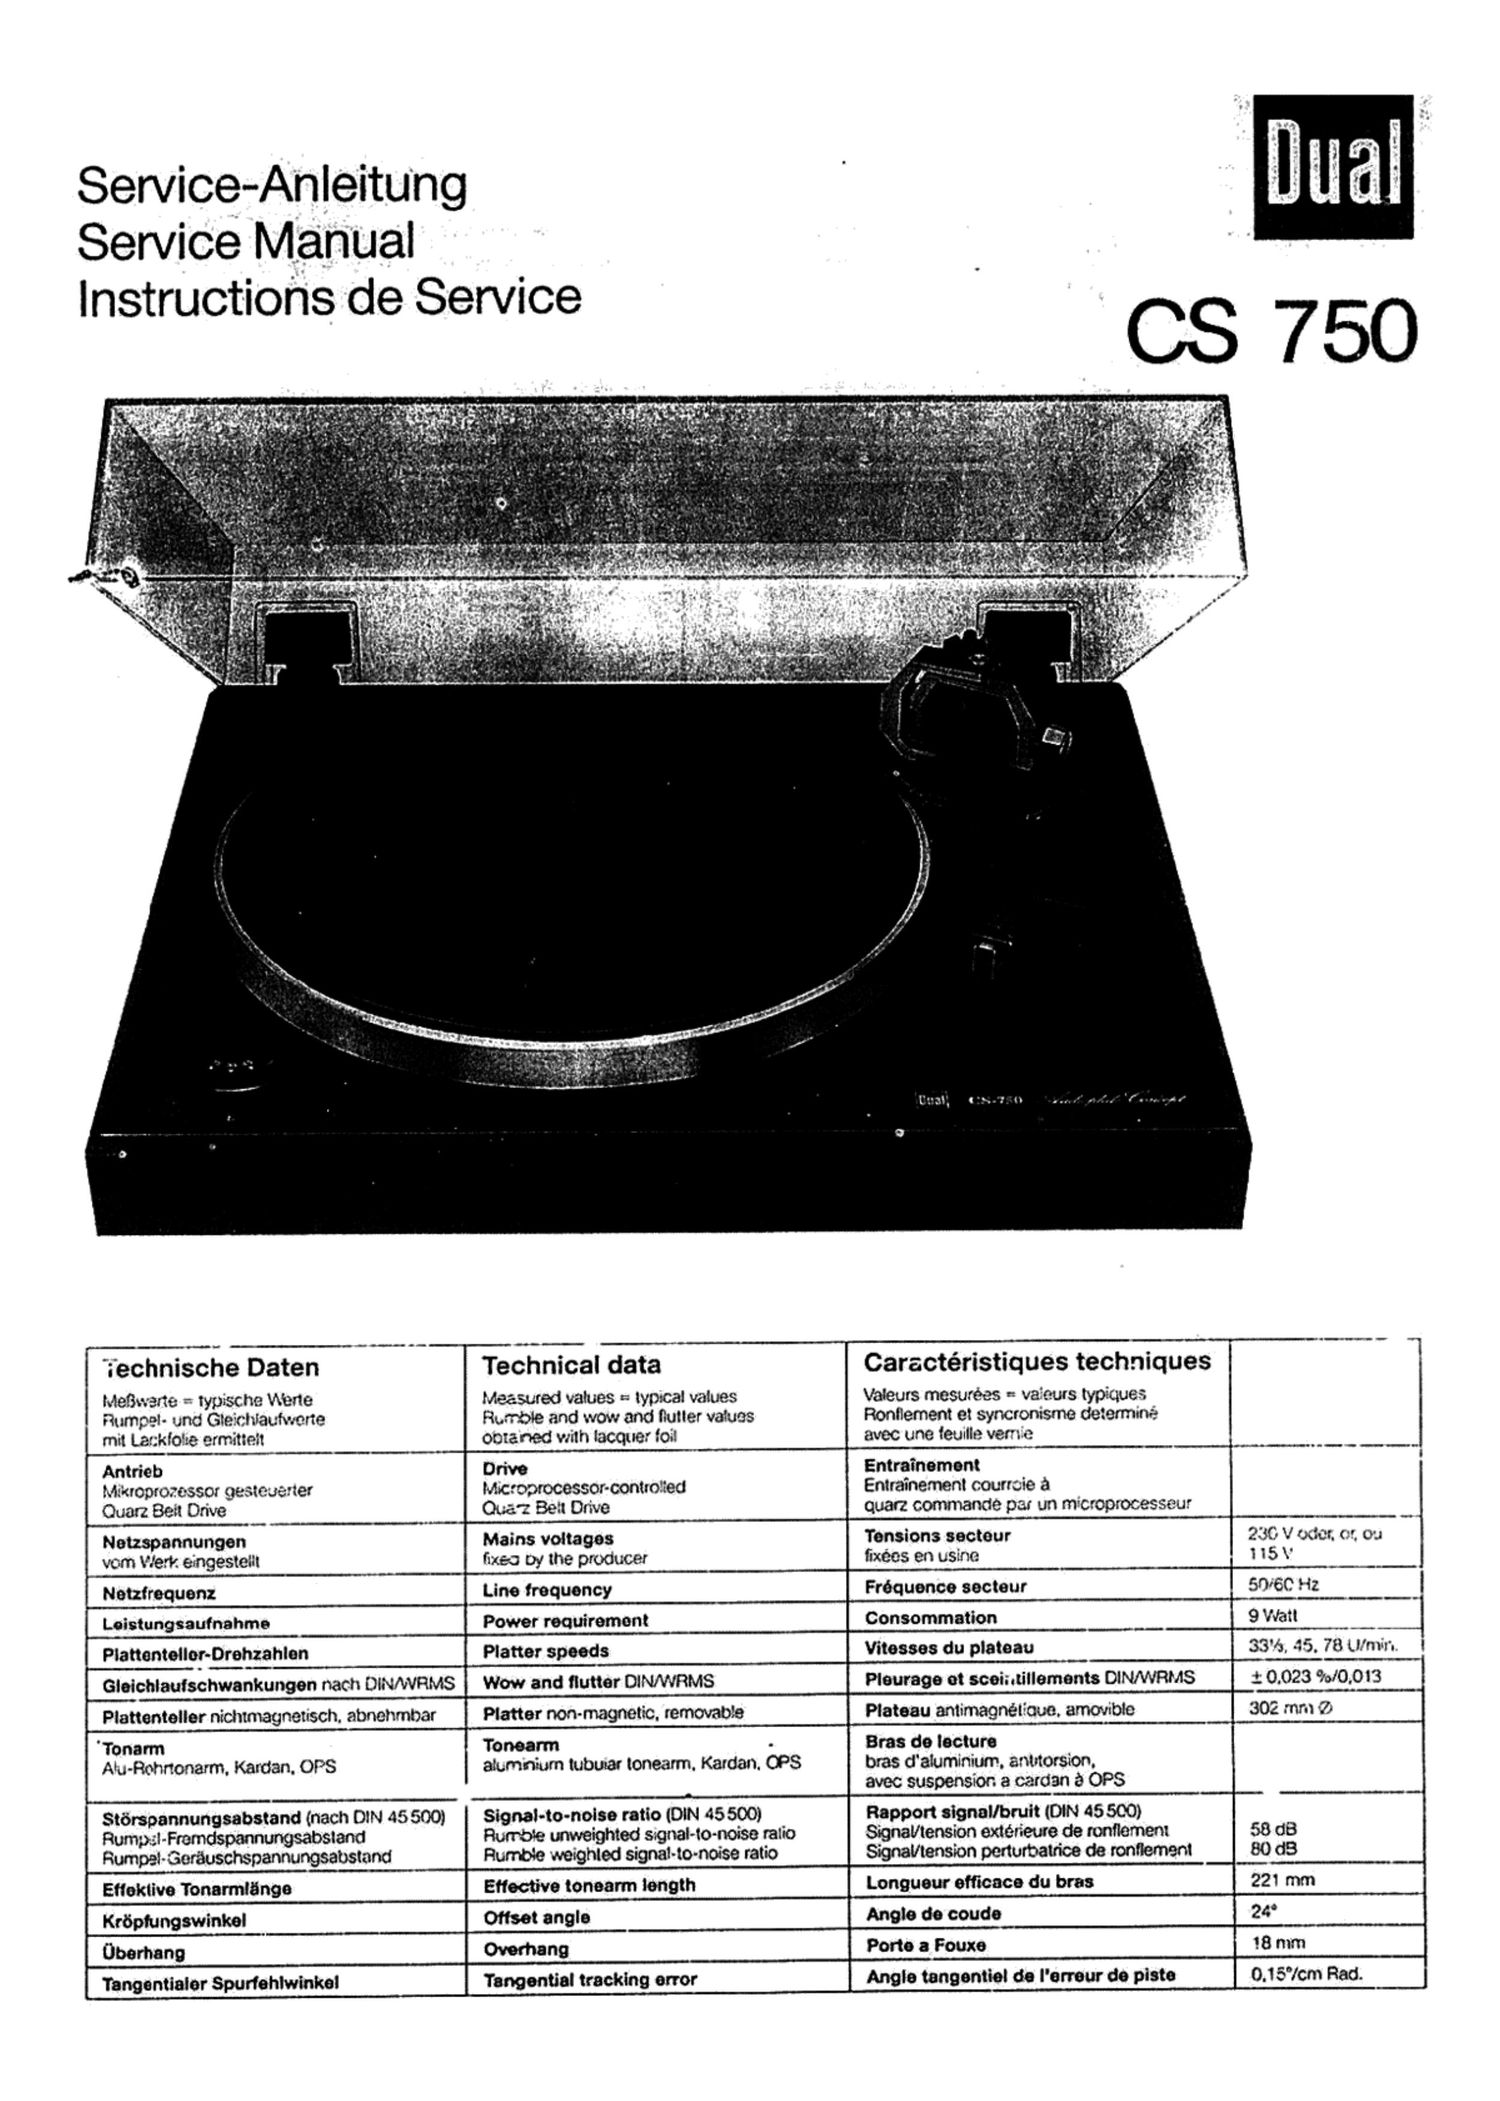 Dual CS 750 Service Manual